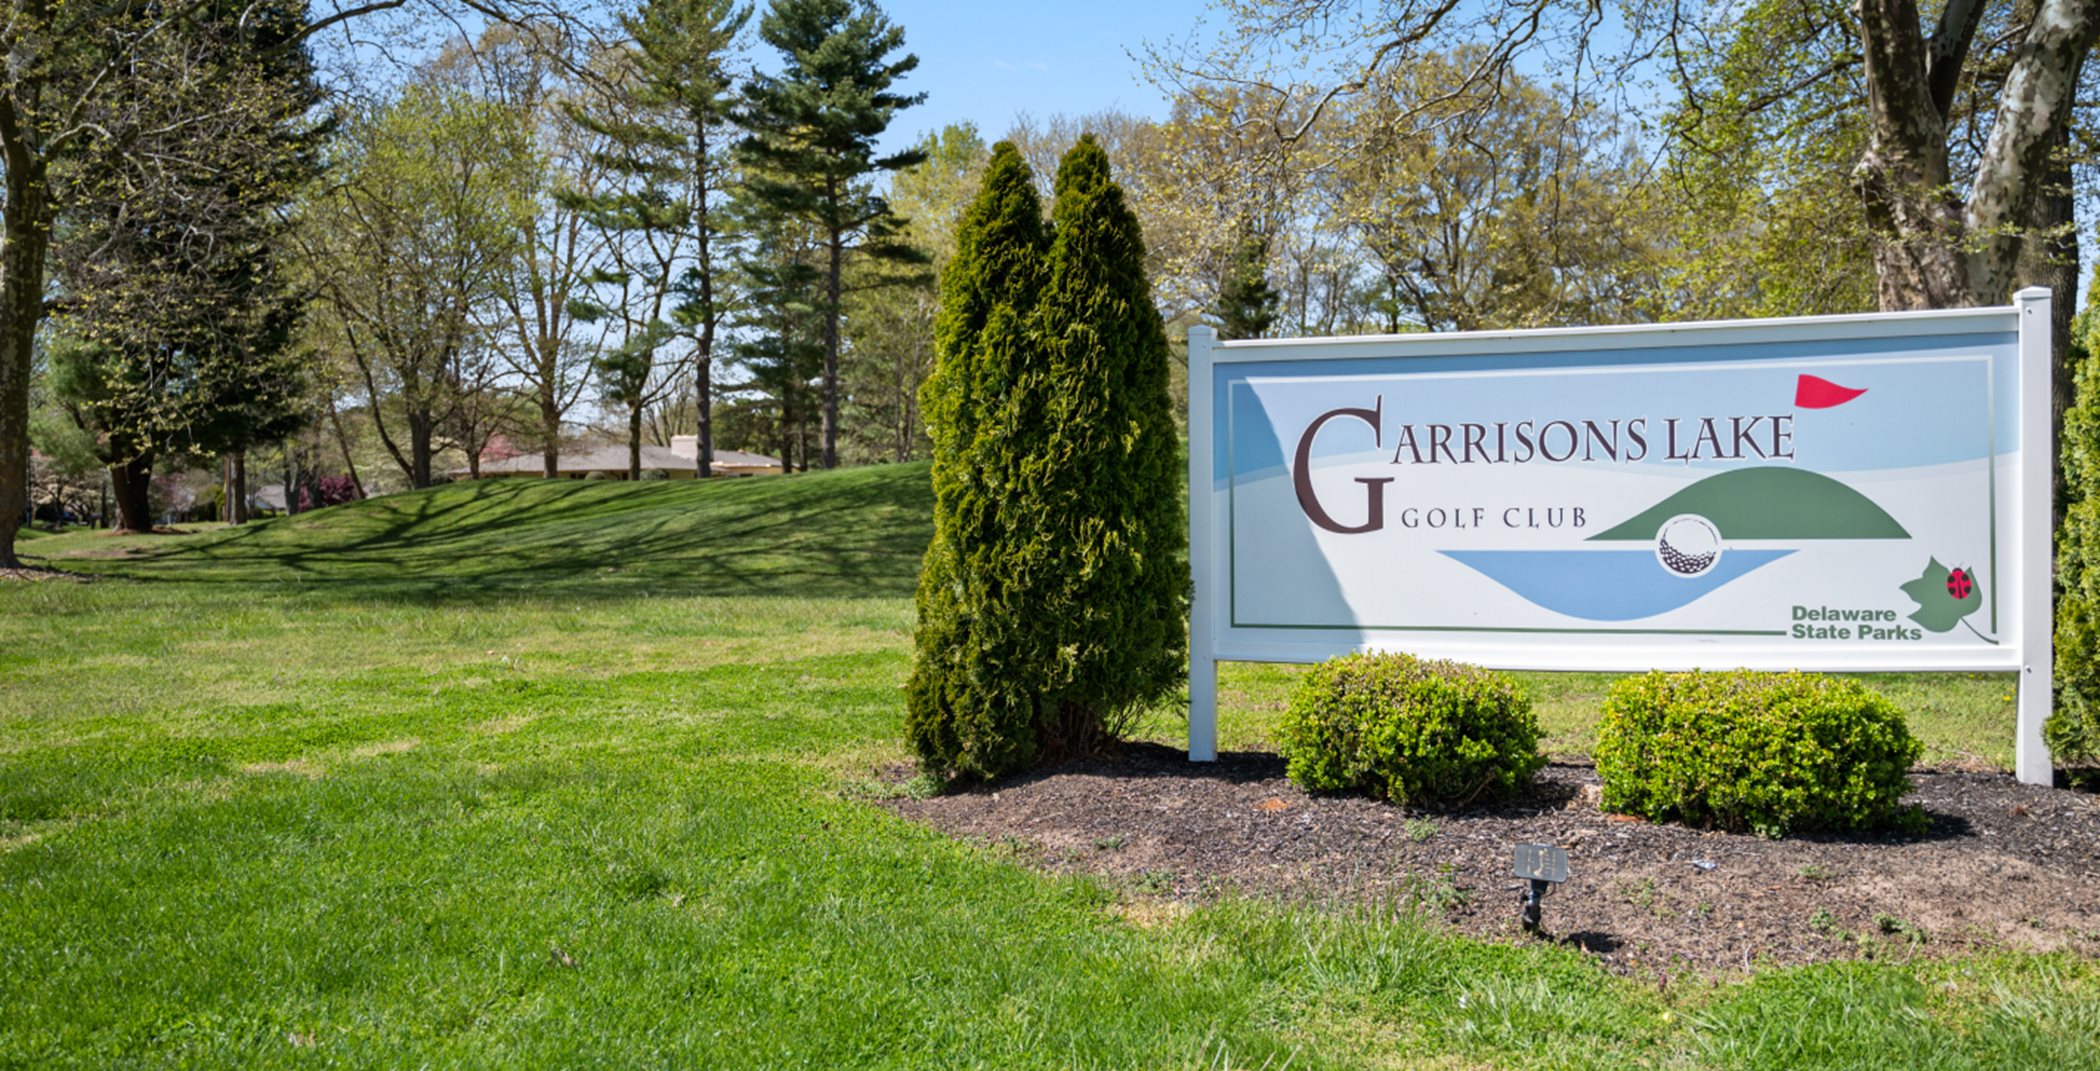 Garrisons Lake Golf Club sign